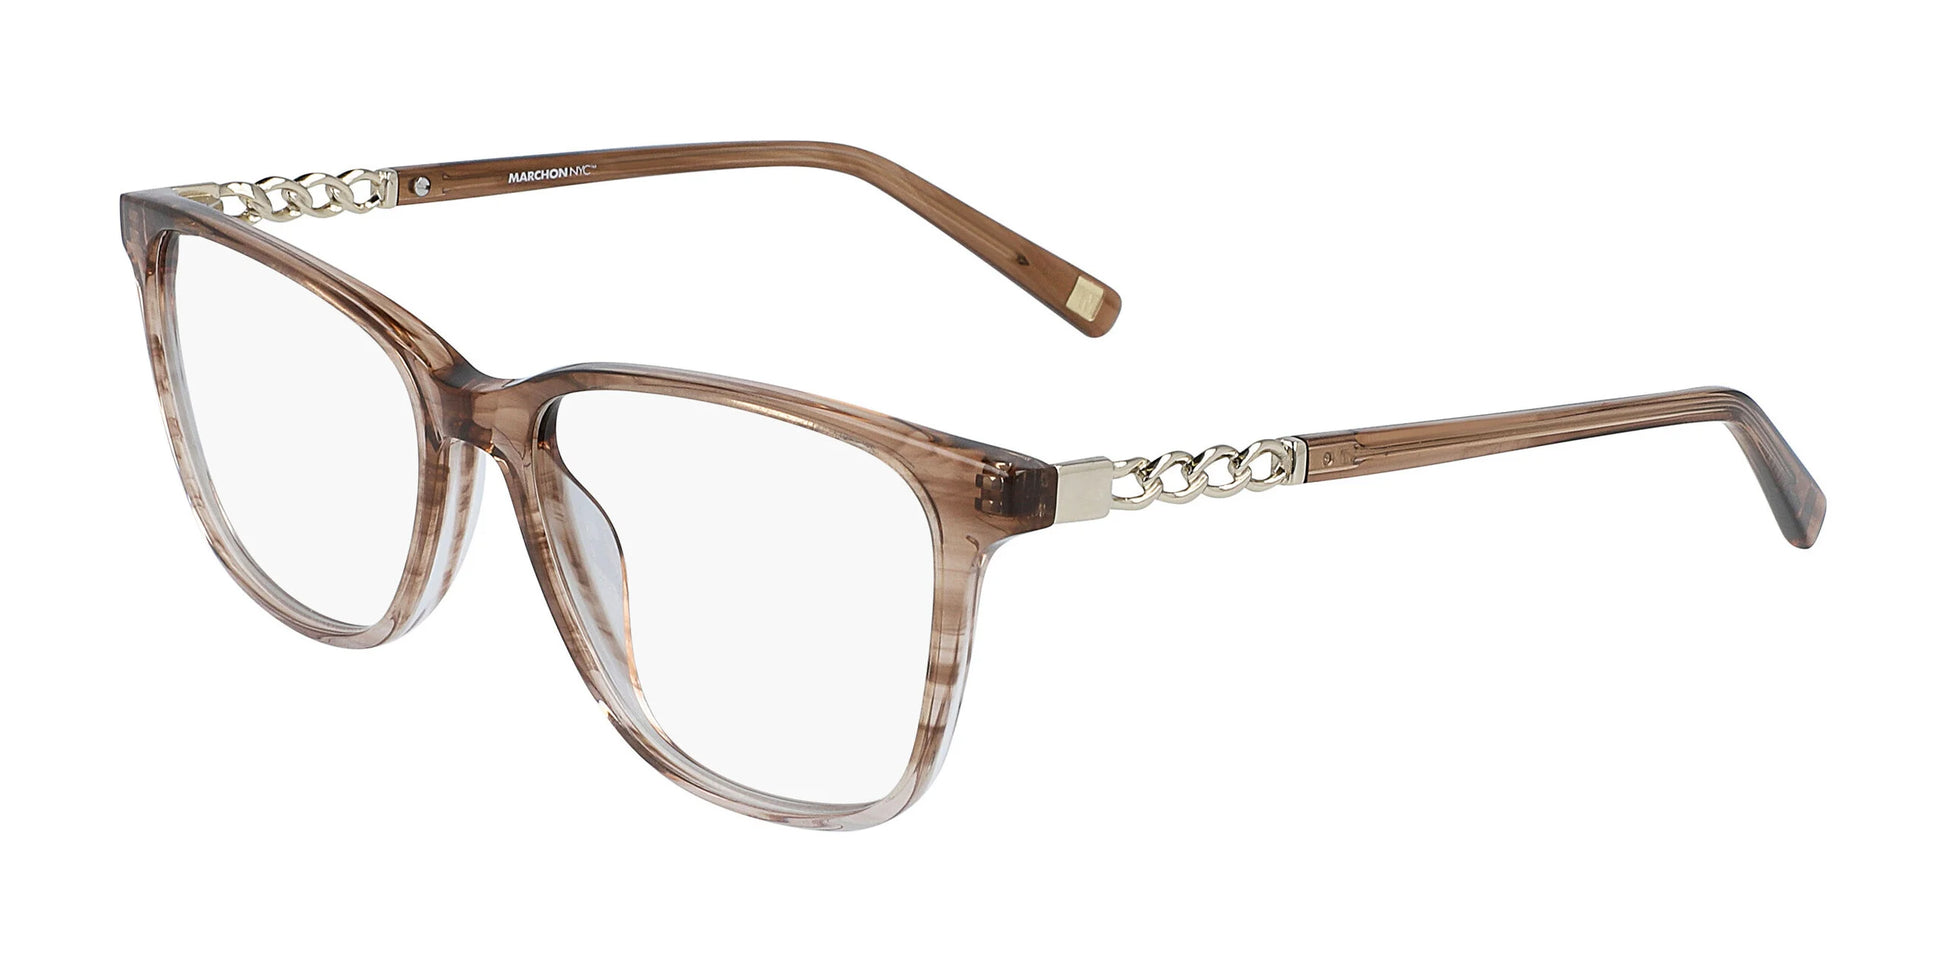 Marchon NYC 5008 Eyeglasses Brown